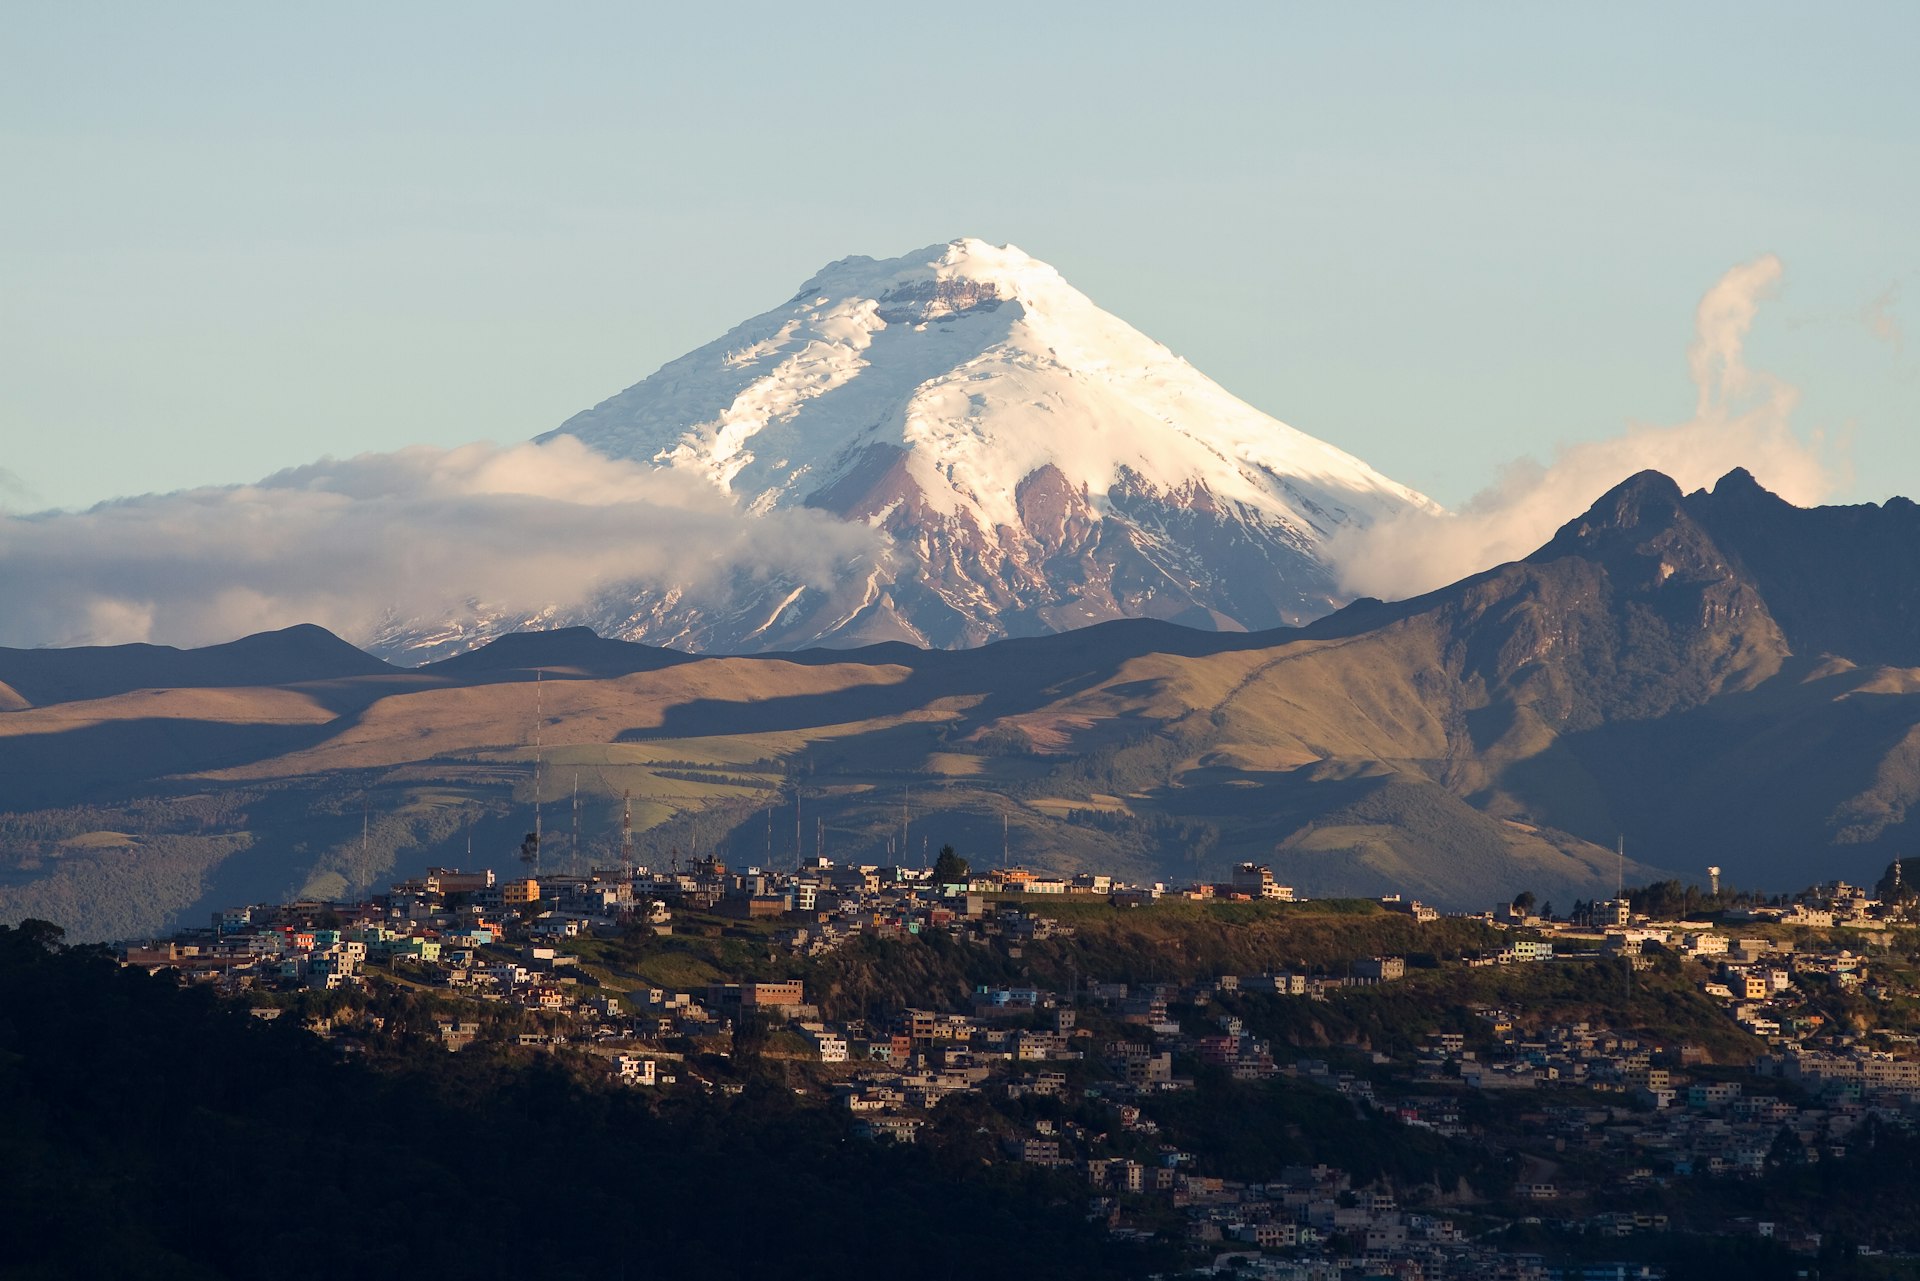 View of the snow-capped cone of Cotopaxi volcano, Ecuador